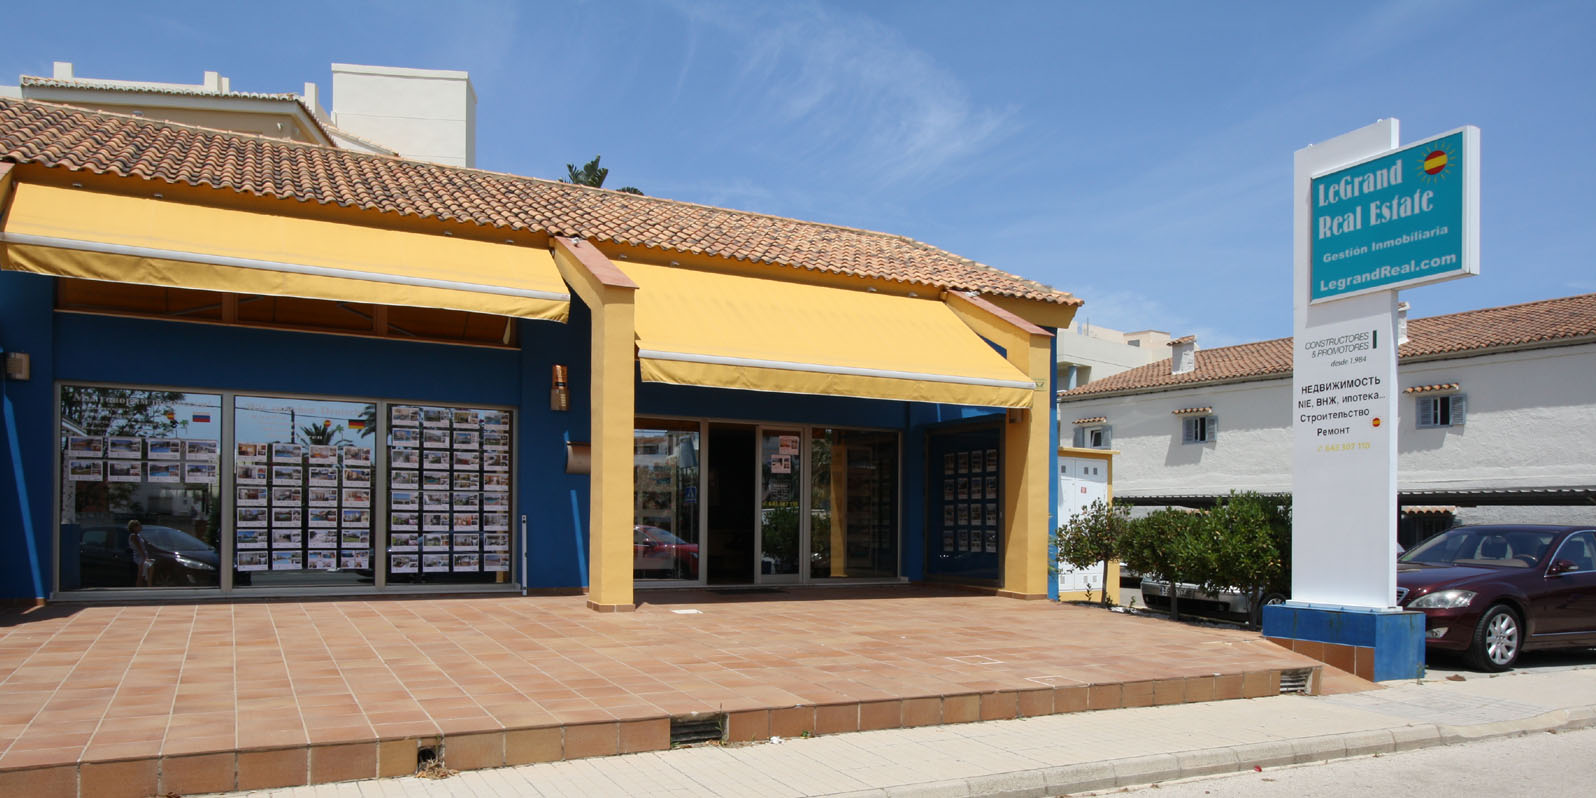 LeGrand Real Estate - immobilie in Spanien, Costa Blanca Denia